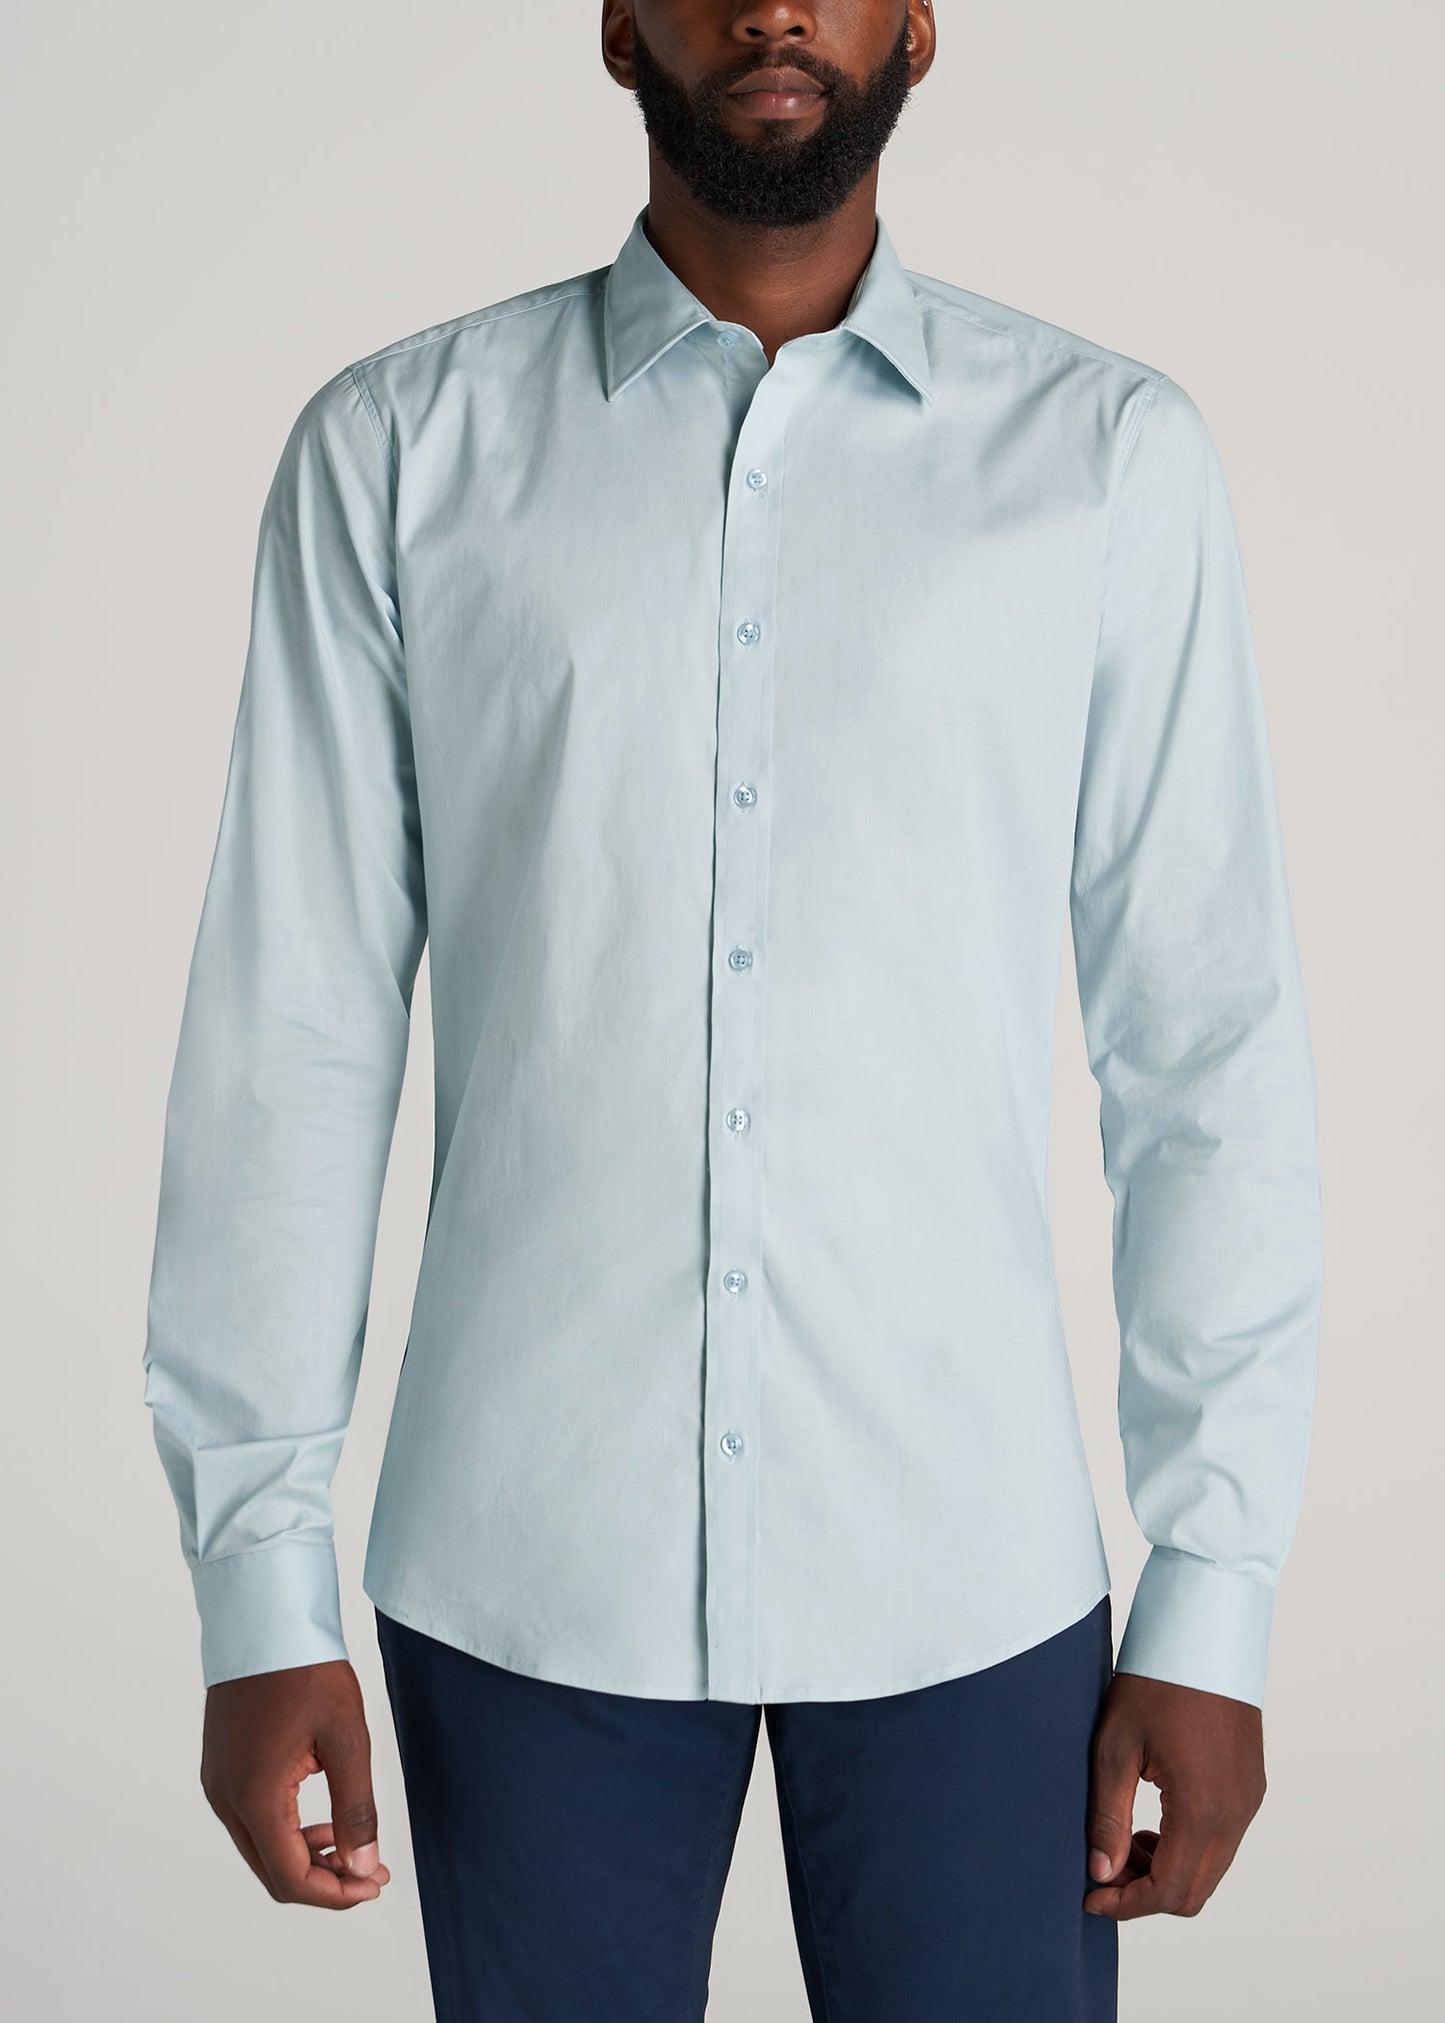 Oskar Button-Up Dress Shirt for Tall Men in Grey Herringbone